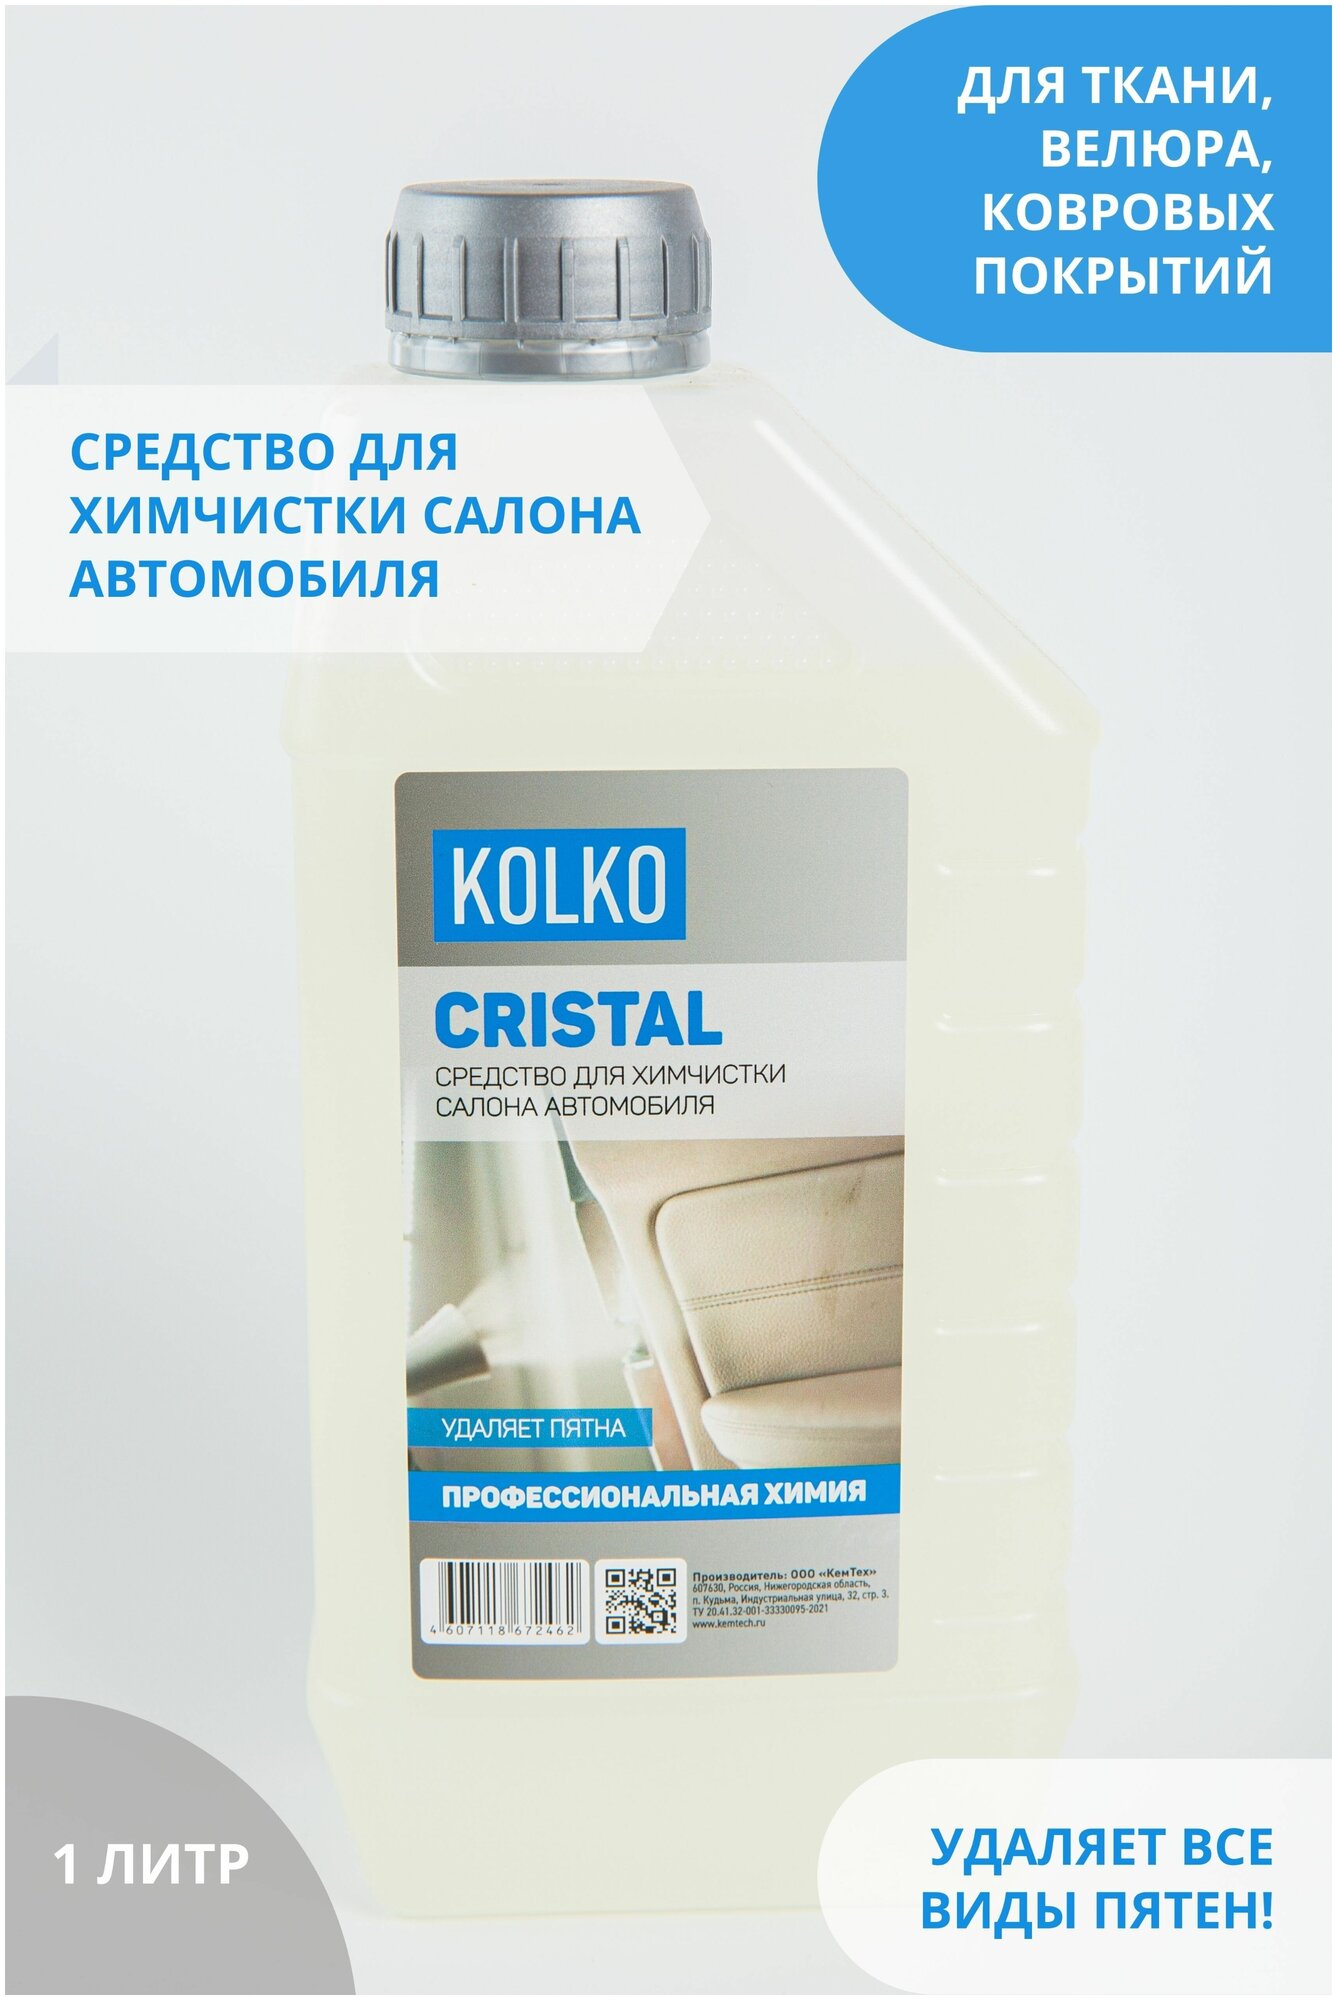 Средство от пятен для химчистки салона, сидений, обивки автомобиля, концентрат Kolko Cristal, 1 литр